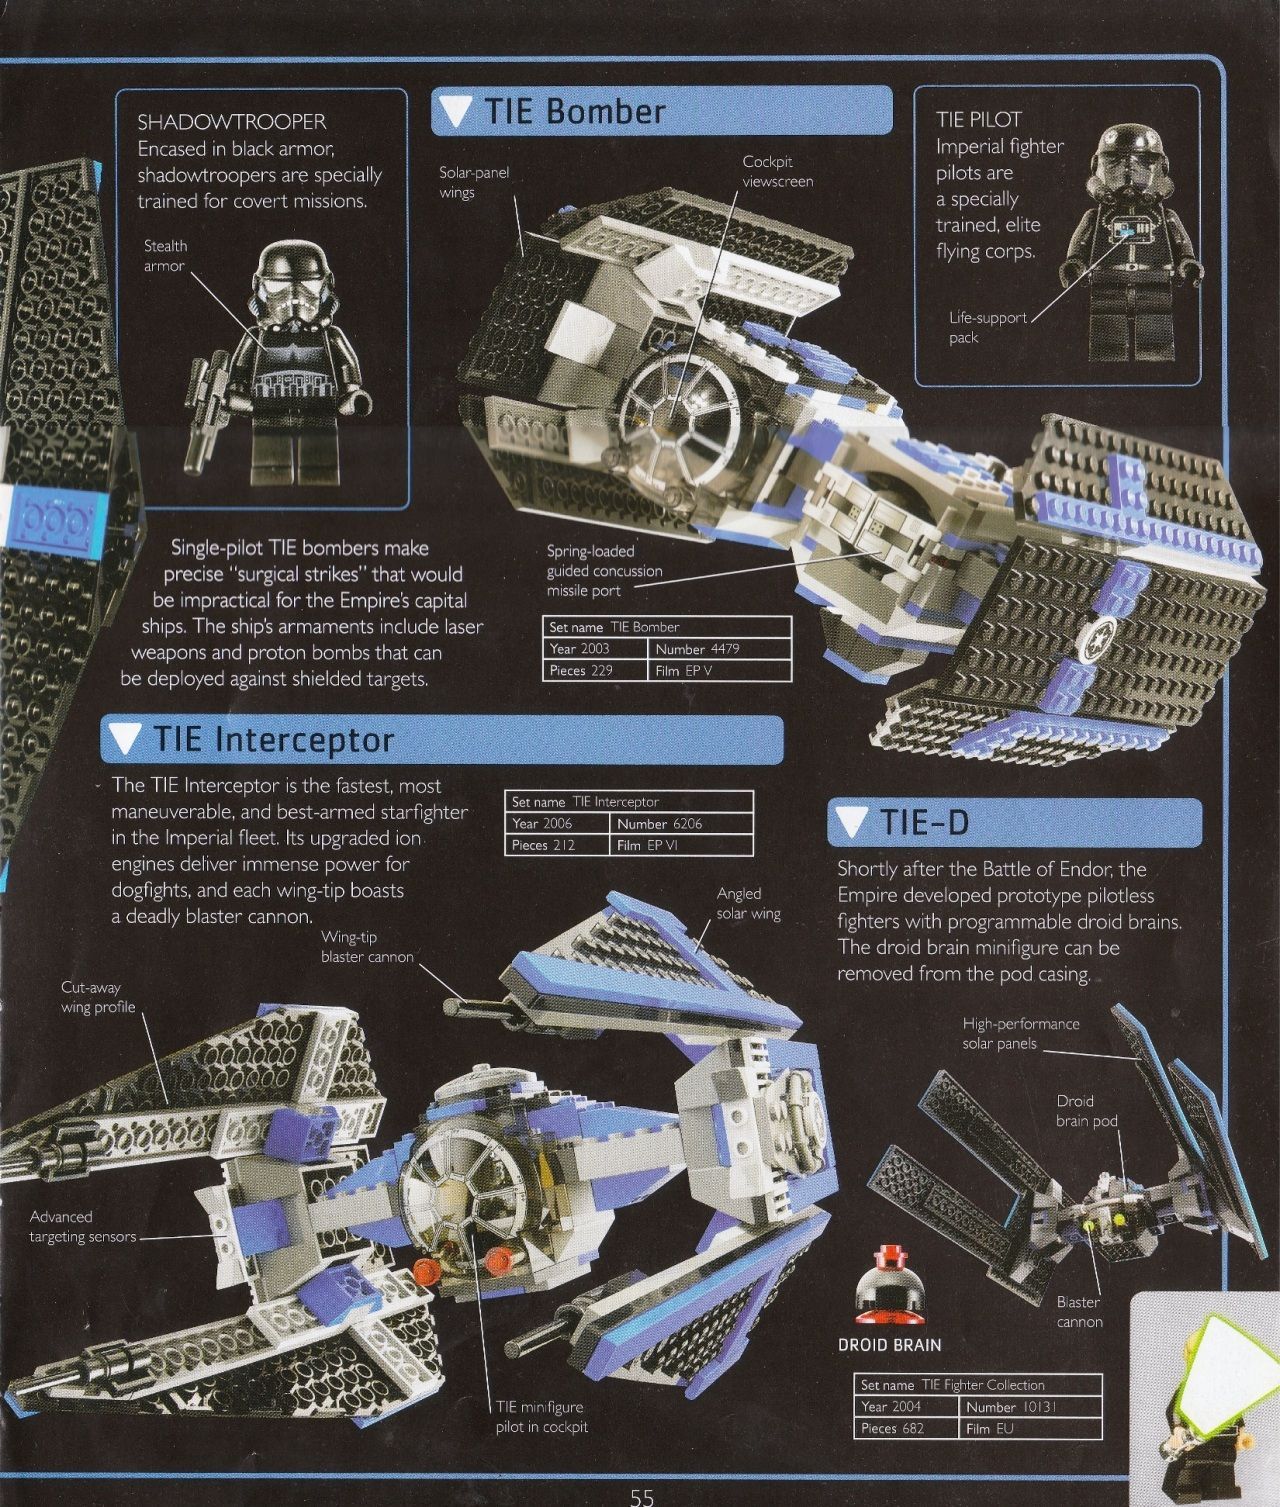 Lego Star Wars The Visual Dictionary 2009 Lego Star Wars The Visual Dictionary 2009 56